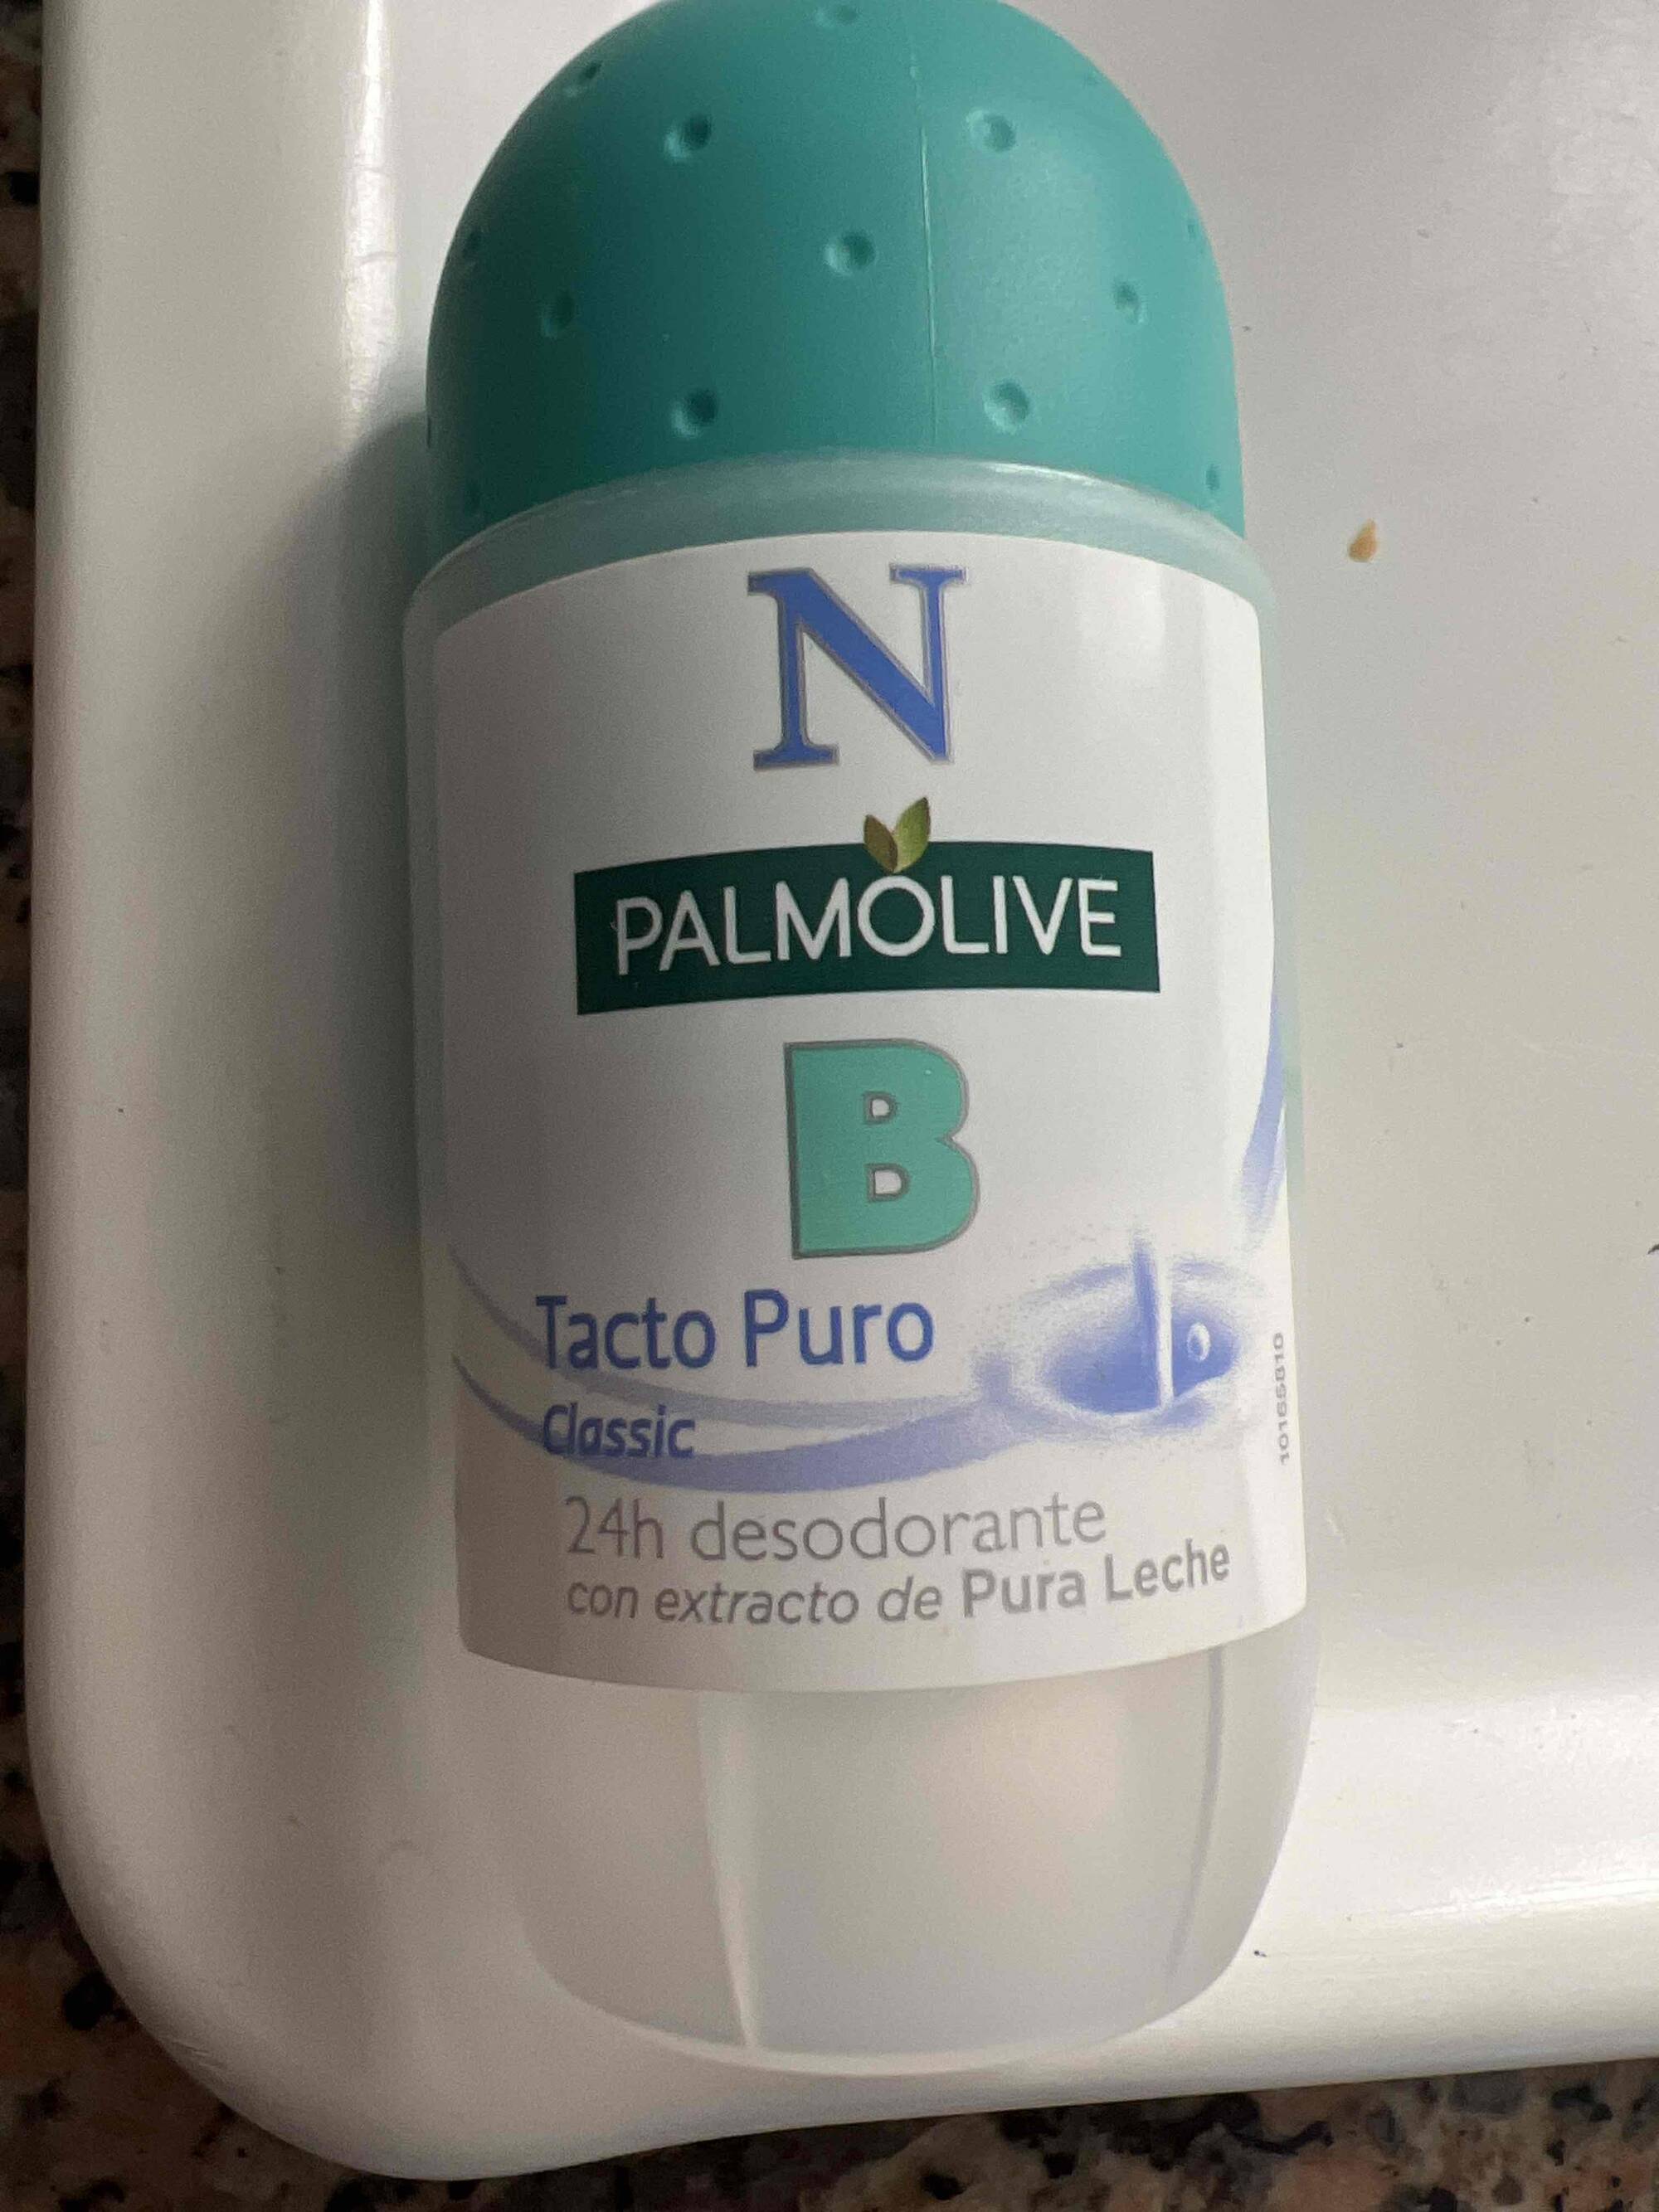 PALMOLIVE - Tacto puro classic - 24h desodorante